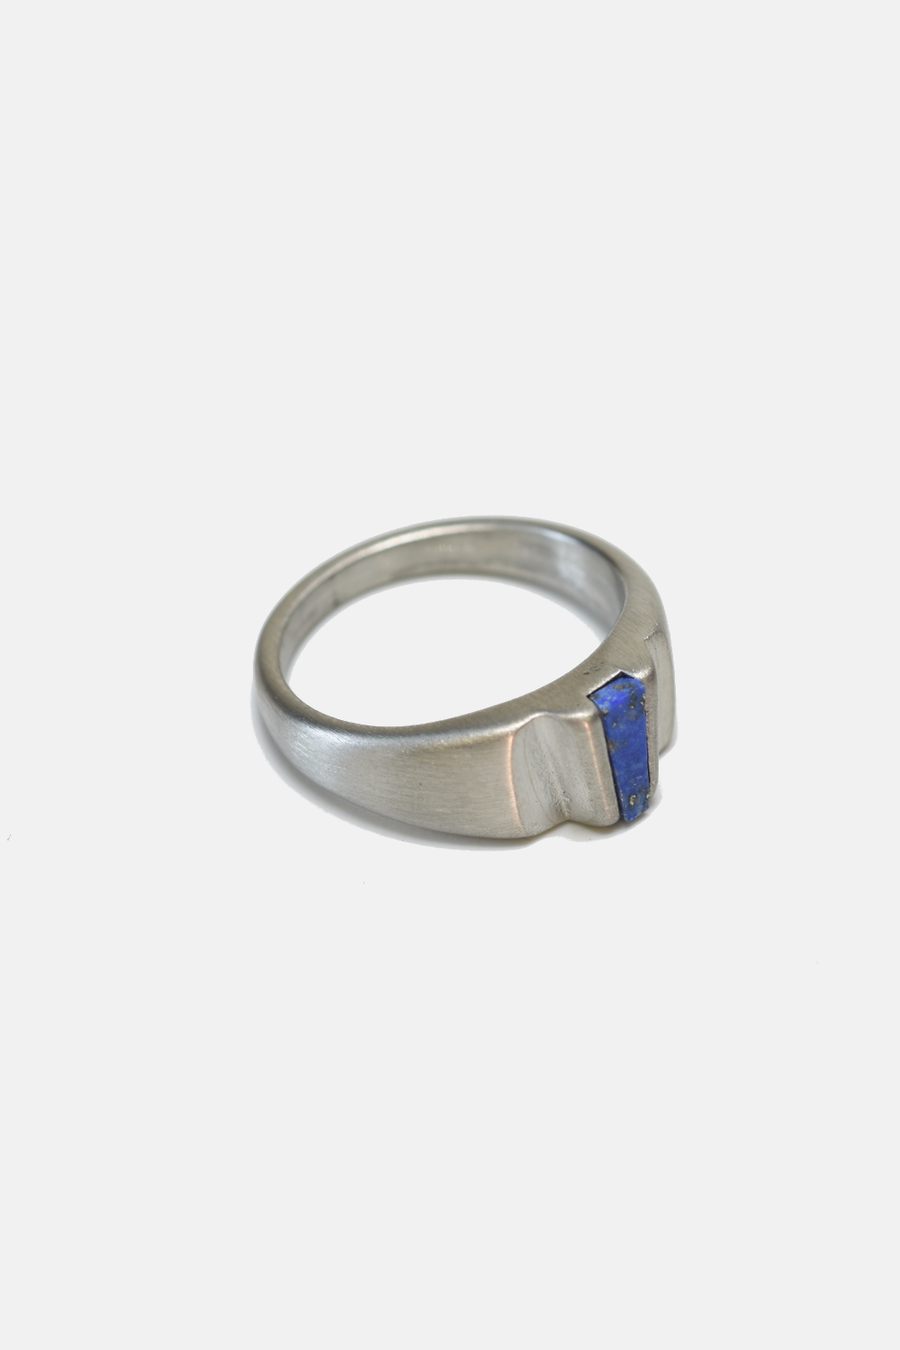 Lapis Lazuli Inlay Ring: 9